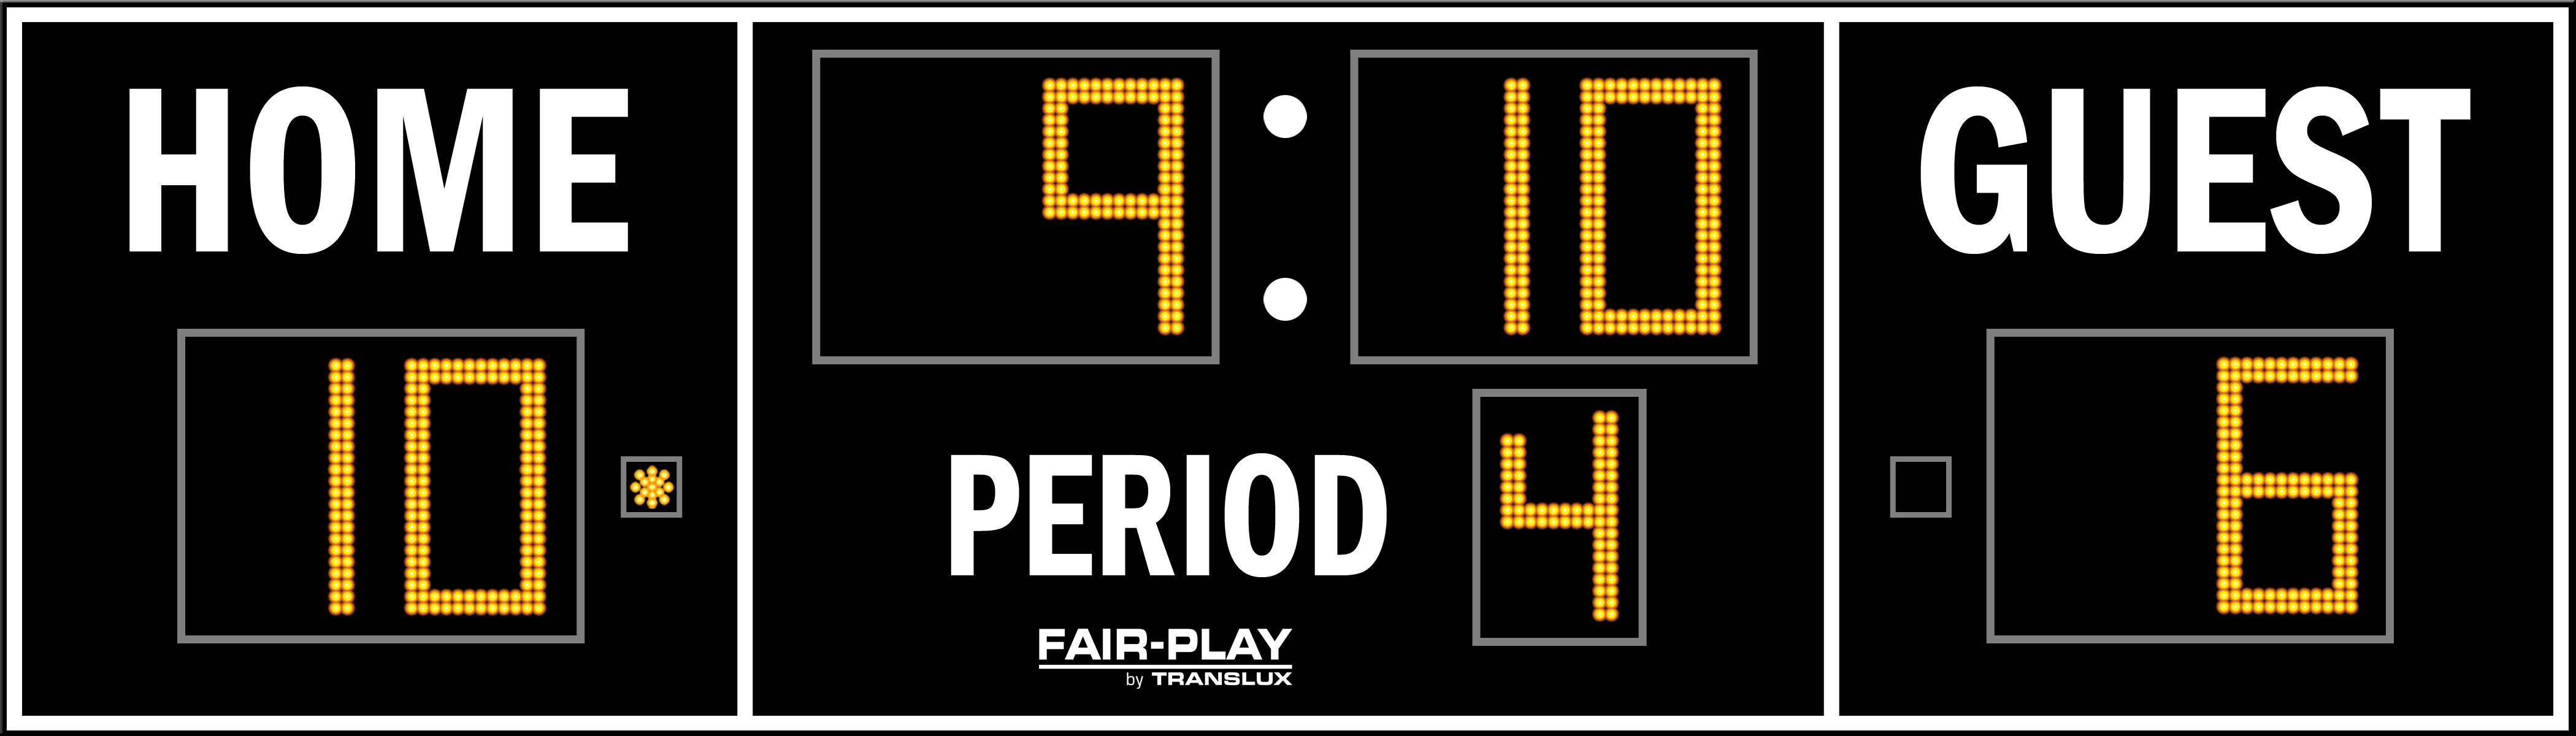 MP-8114-2 | Fair-Play Scoreboards